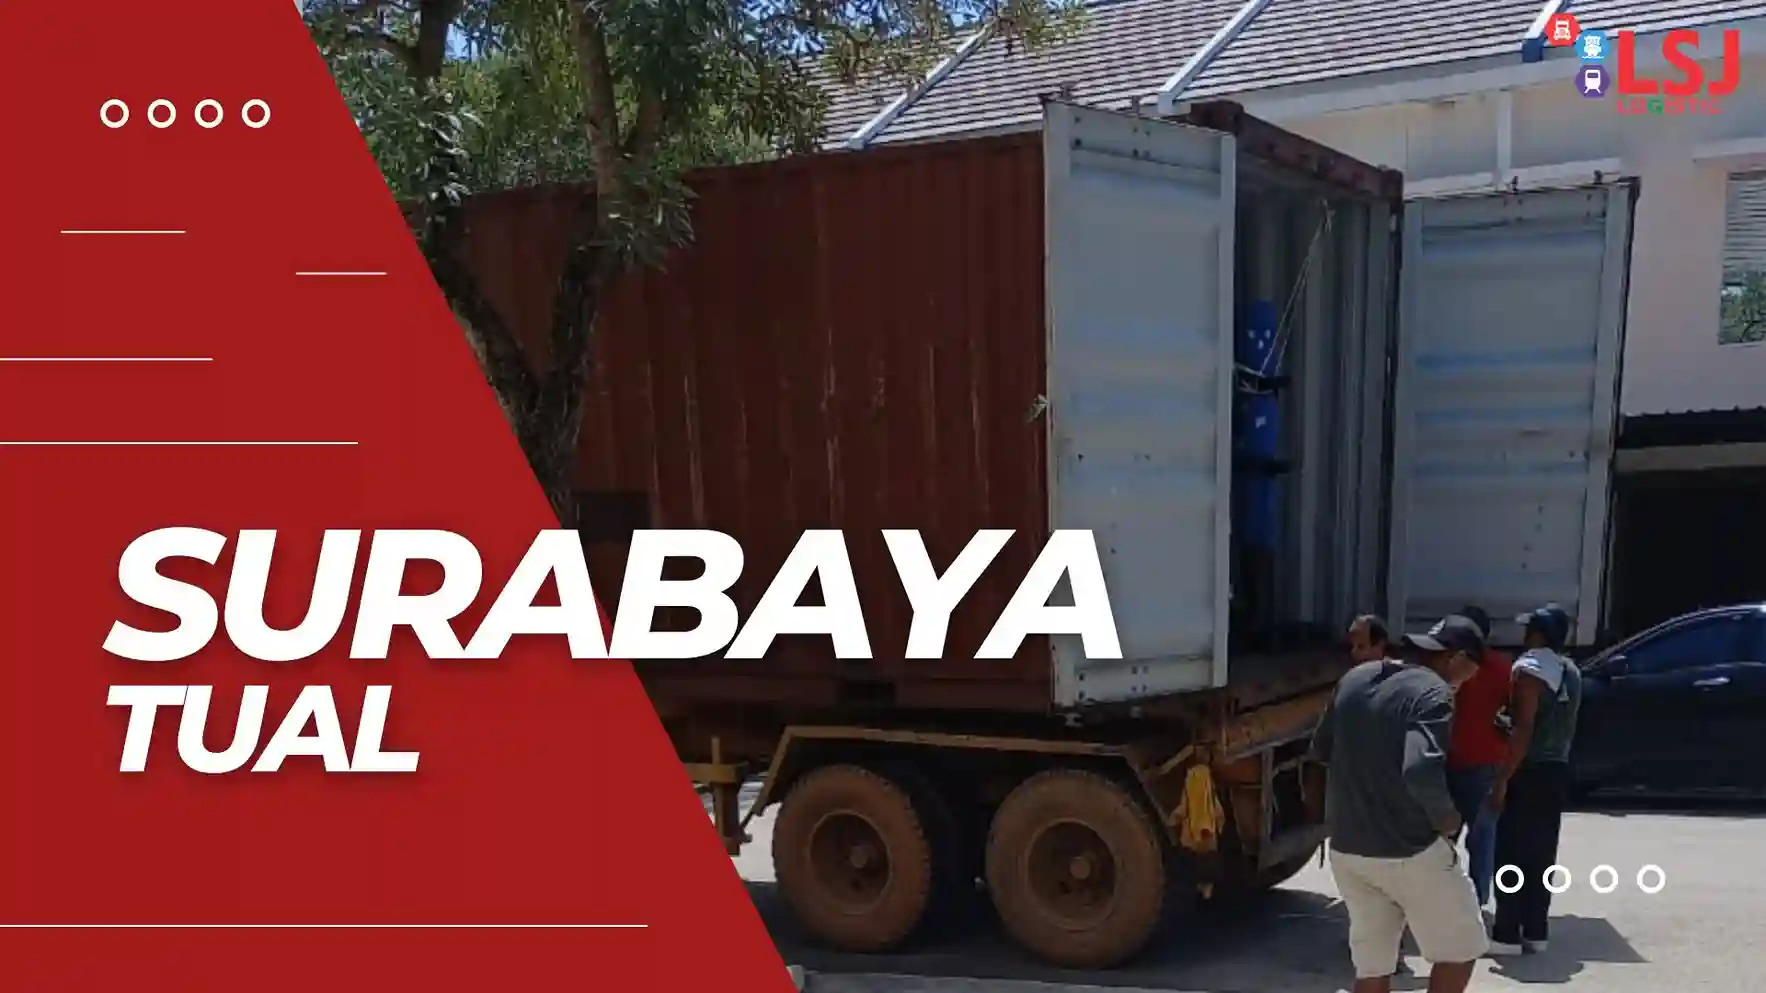 Ekspedisi Container Surabaya Tual